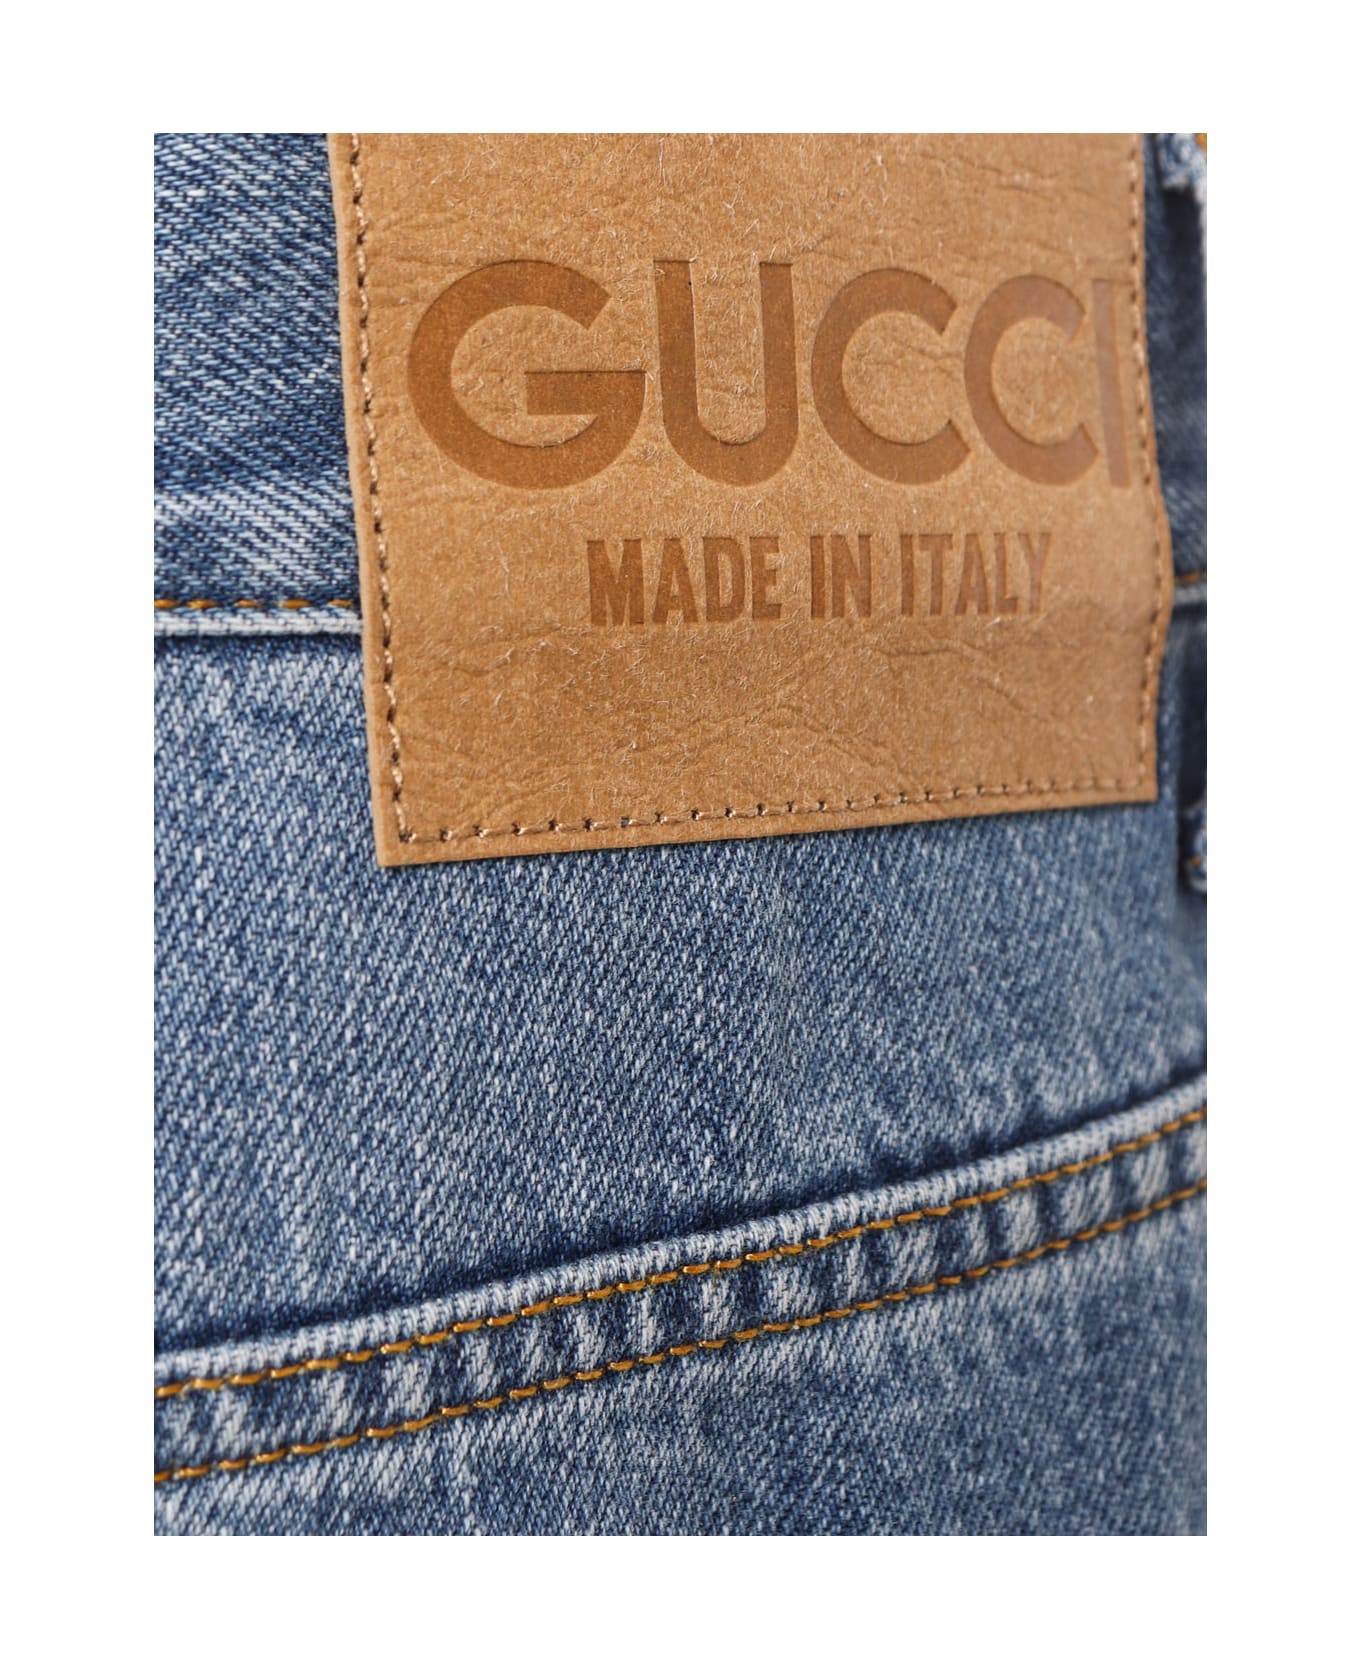 Gucci Jeans - Blue デニム